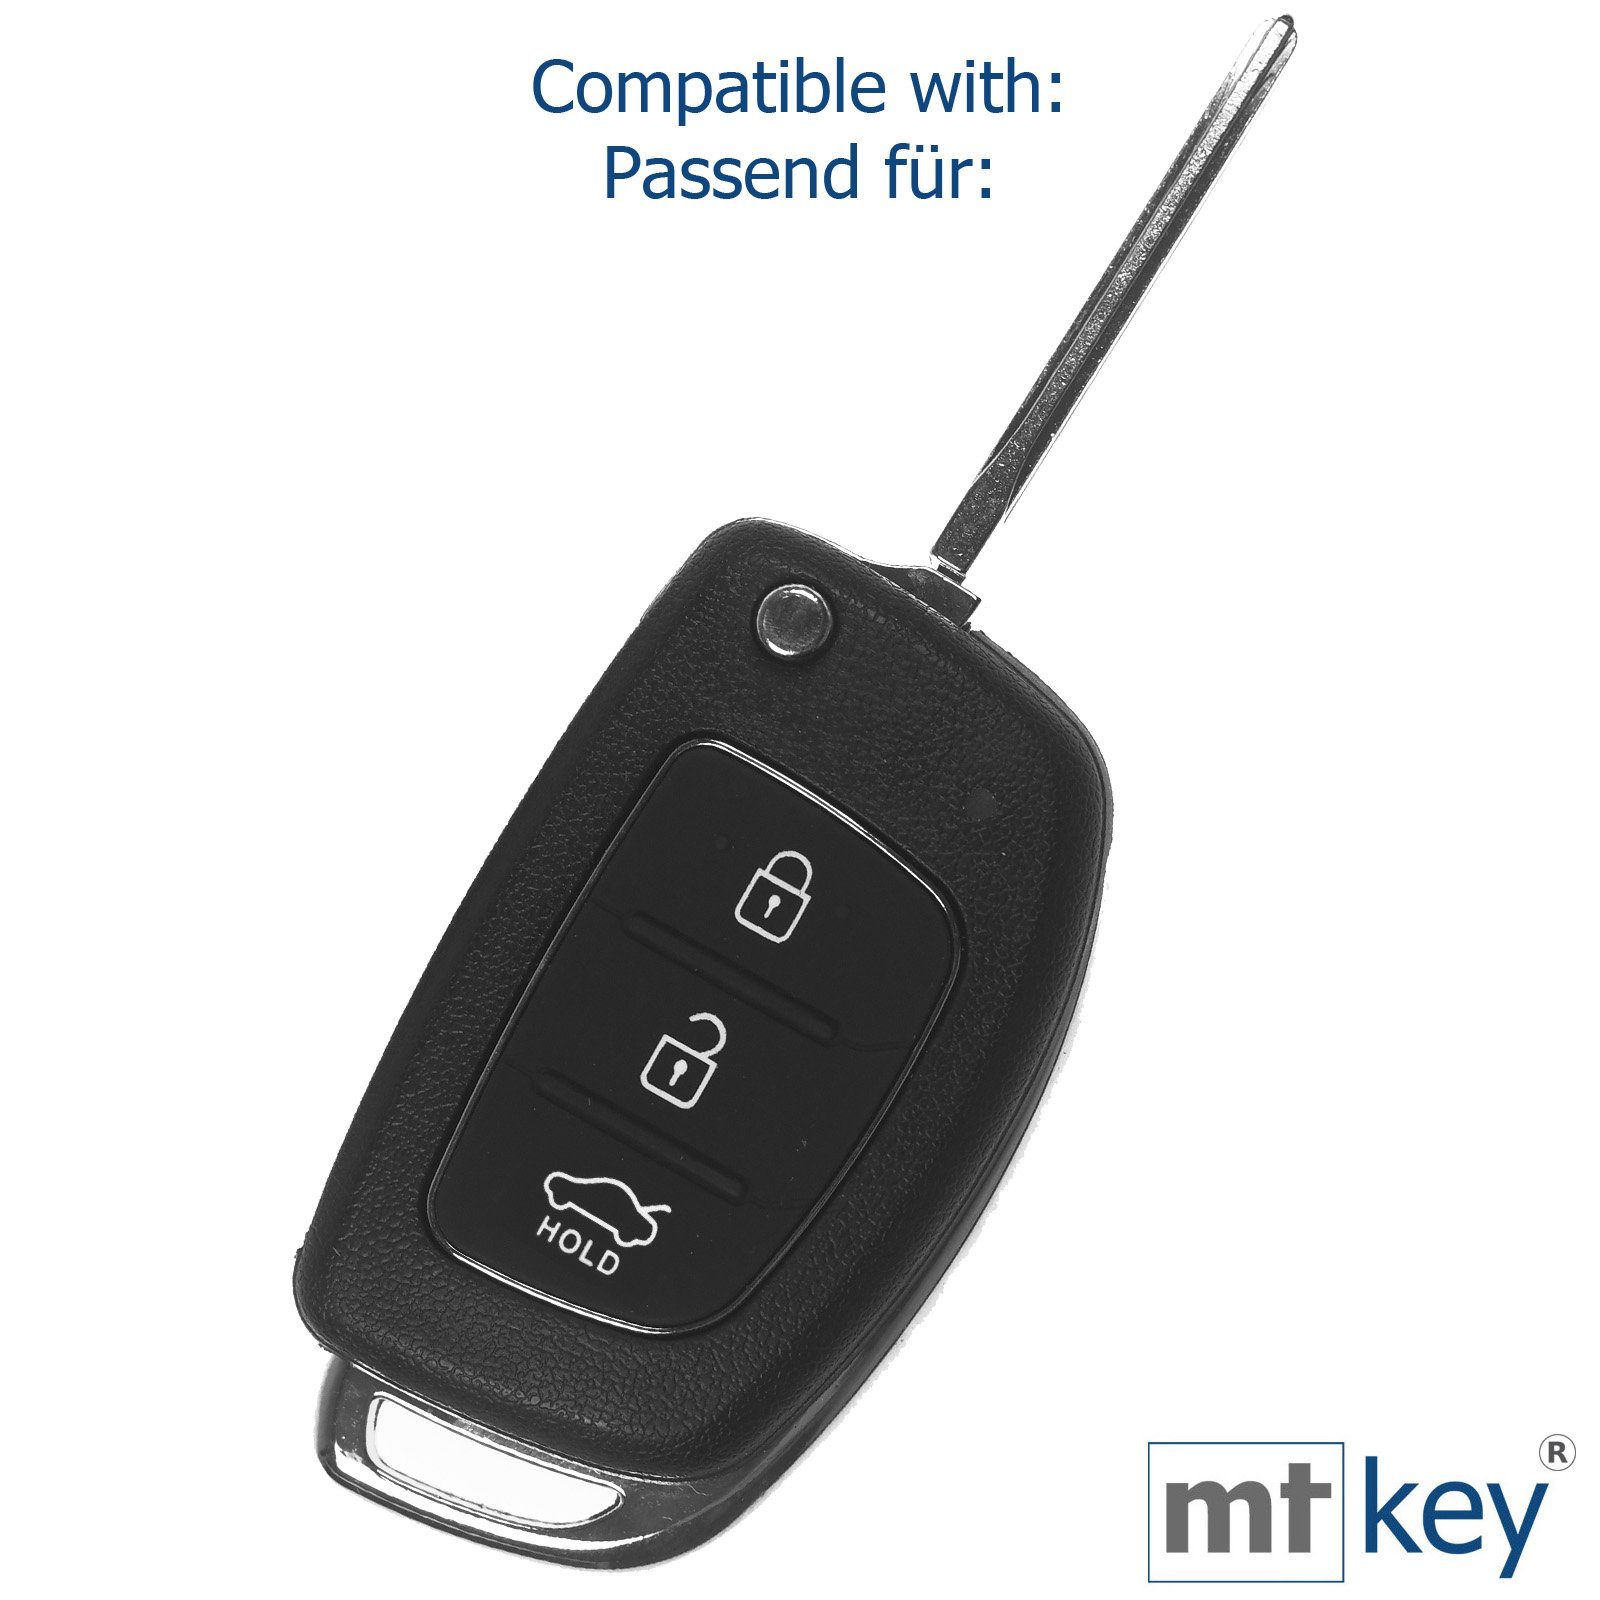 Tucson Hyundai Autoschlüssel für im Wabe mt-key Silikon + Klappschlüssel ix25 Schutzhülle Knopf 3 i40 Pink Design Accent Schlüsseltasche i20 Schlüsselband, i10 ix35